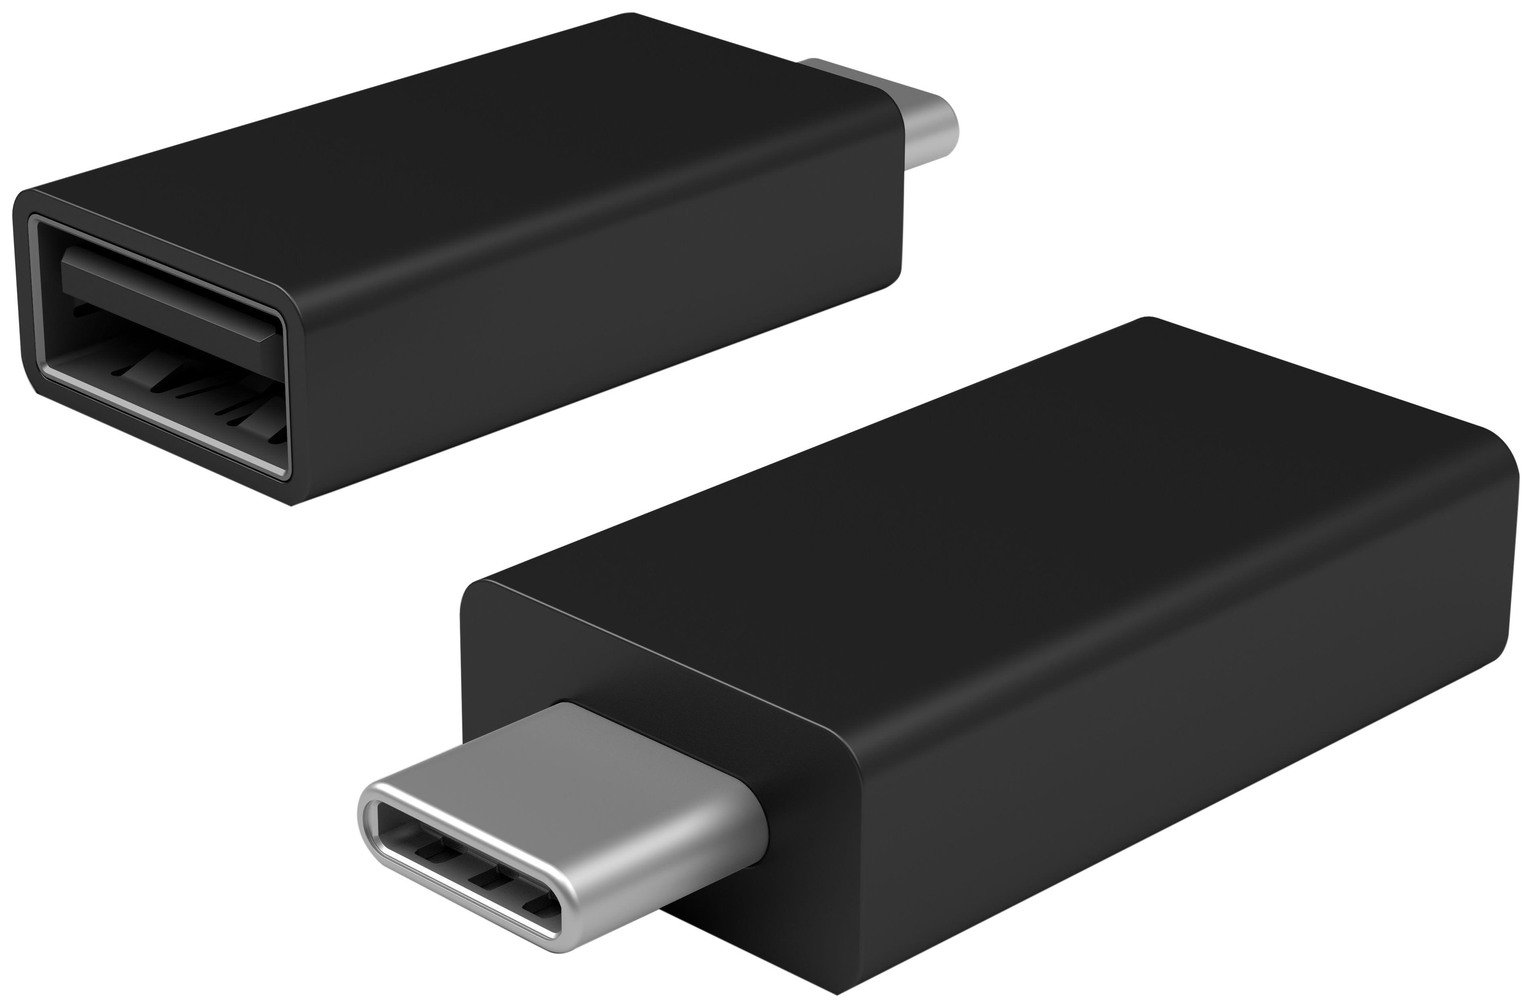 Microsoft Surface USB-C to USB 3.0 Adaptor